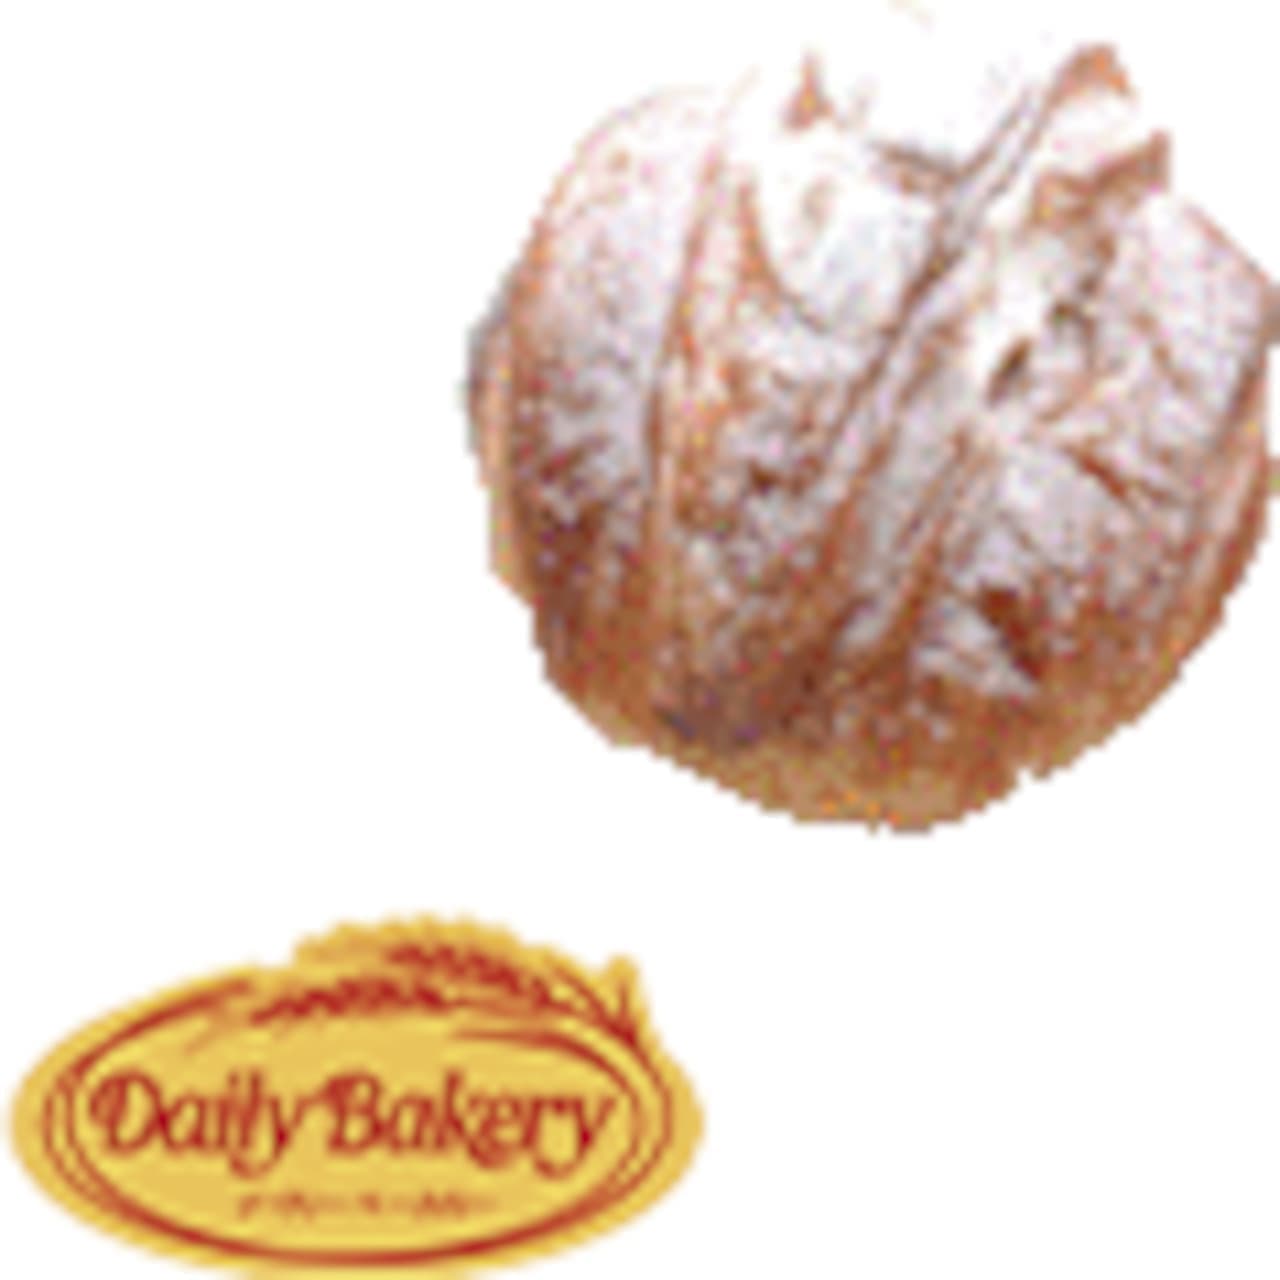 Daily Yamazaki "Choux Croissant (whipped cream)